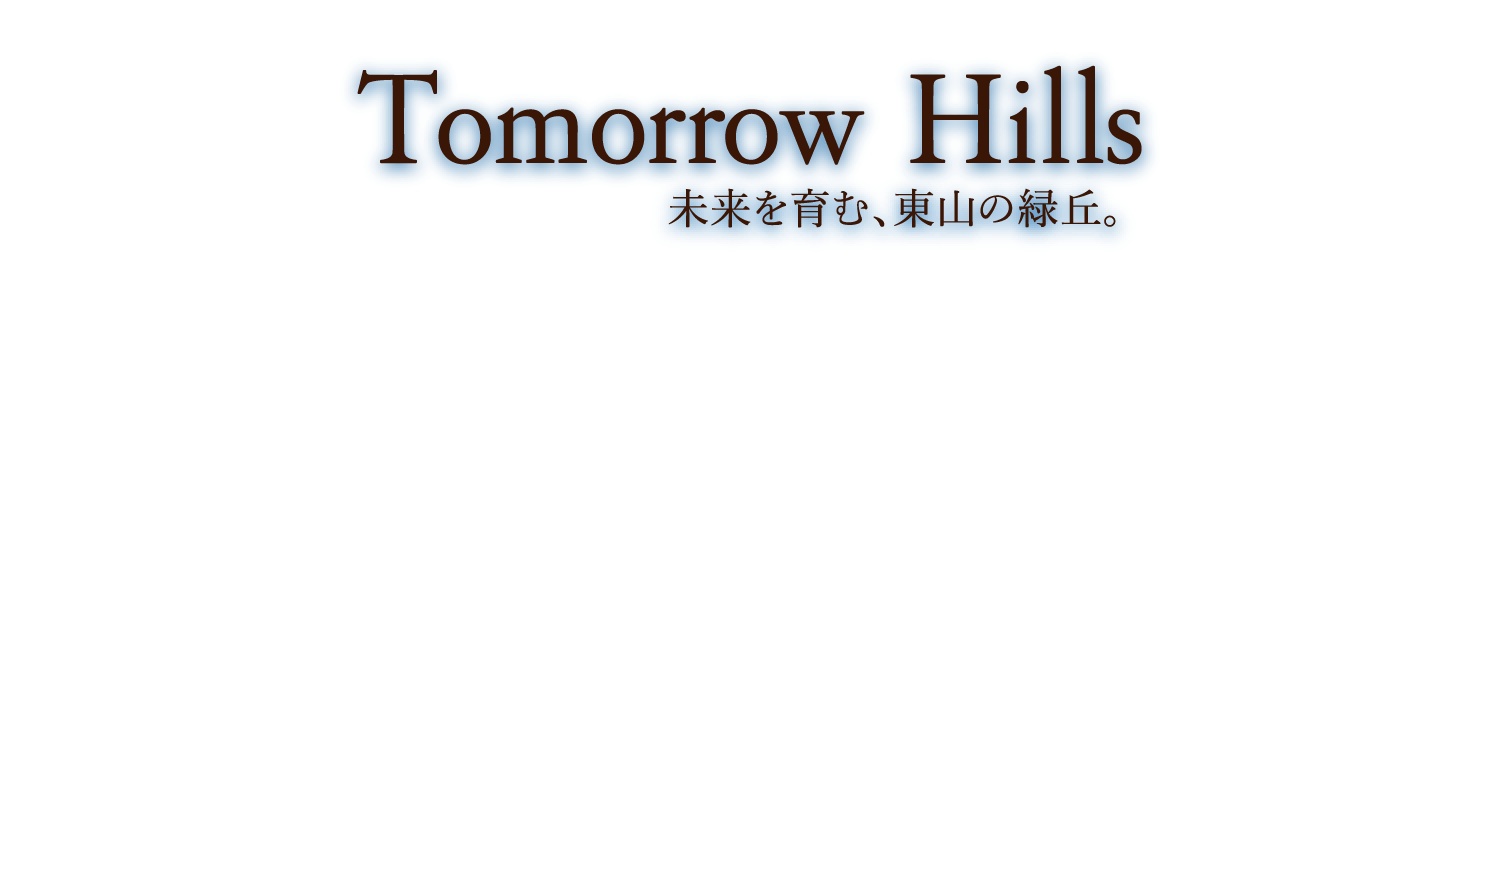 Tomorrow Hills 未来を育む、東山の緑丘。